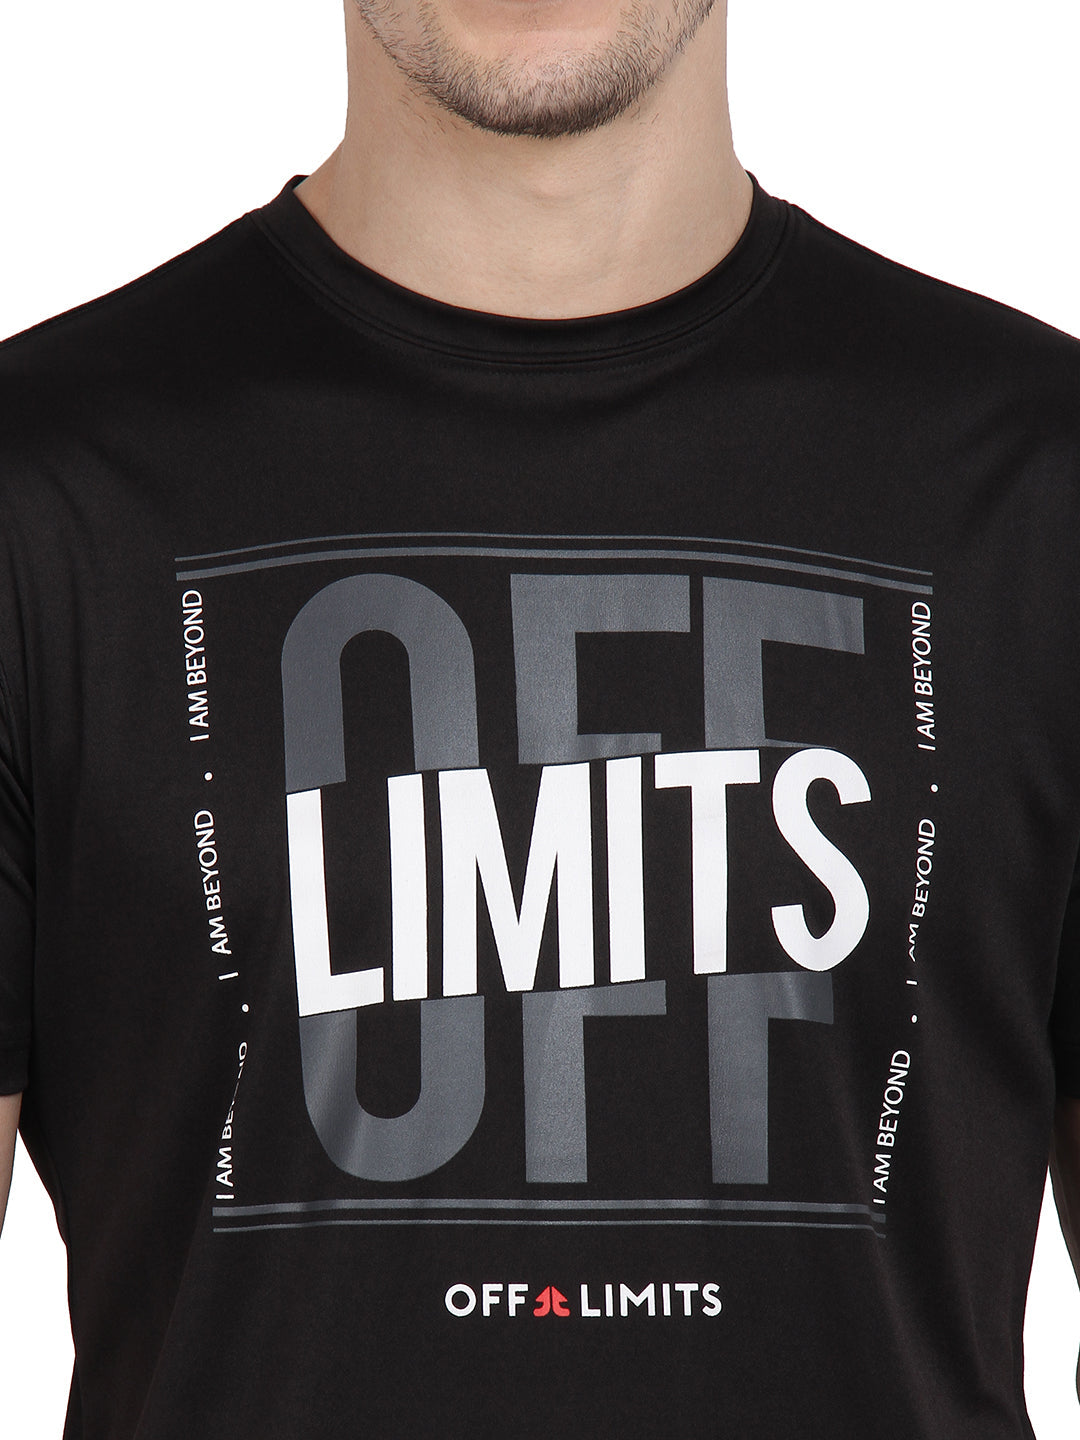 OFF LIMITS TEE Men Tshirts & Graphic Tees